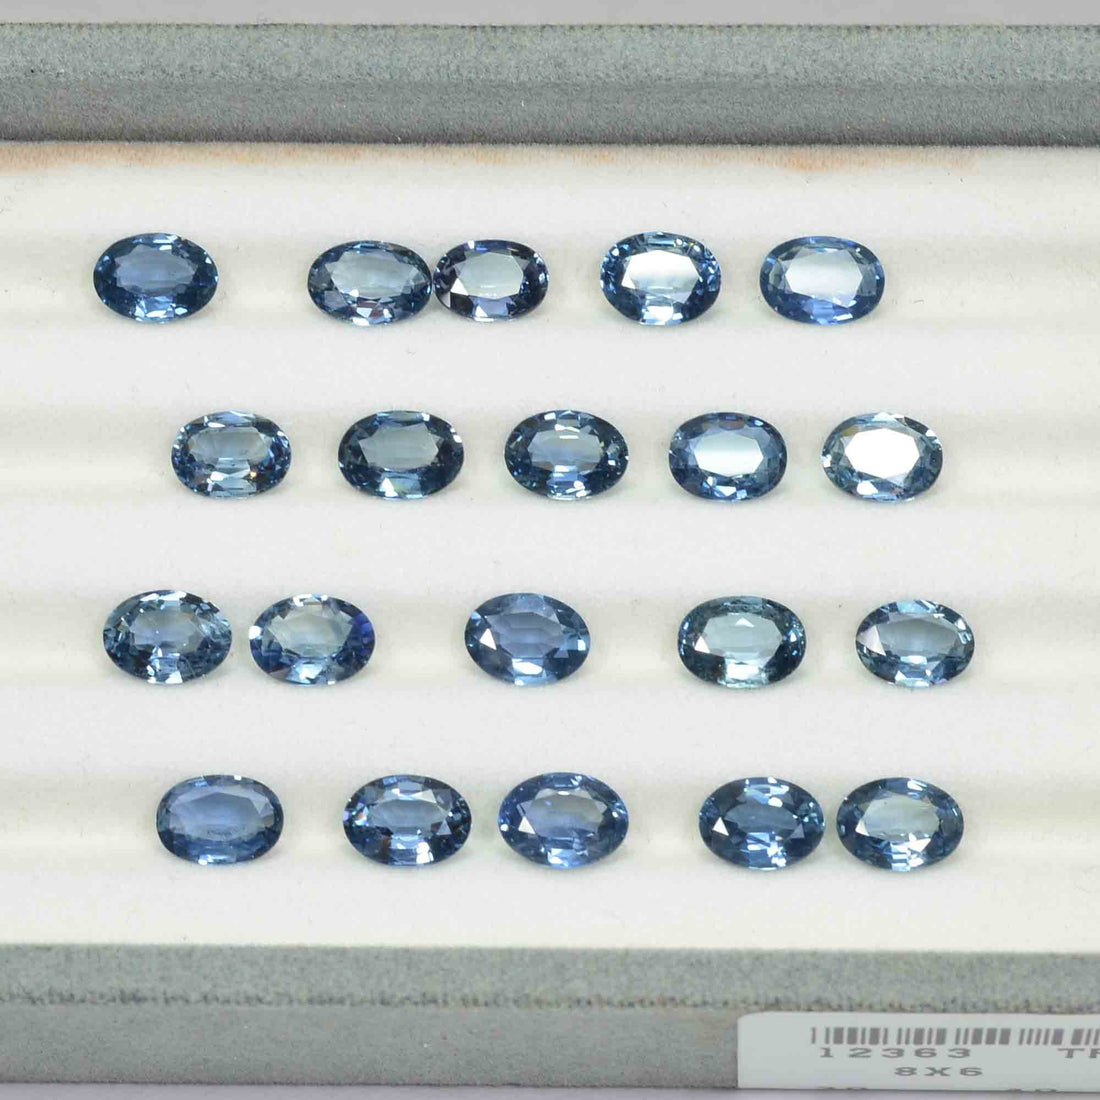 8x6 MM Natural Teal Bluish Green Sapphire Loose Gemstone Oval Cut